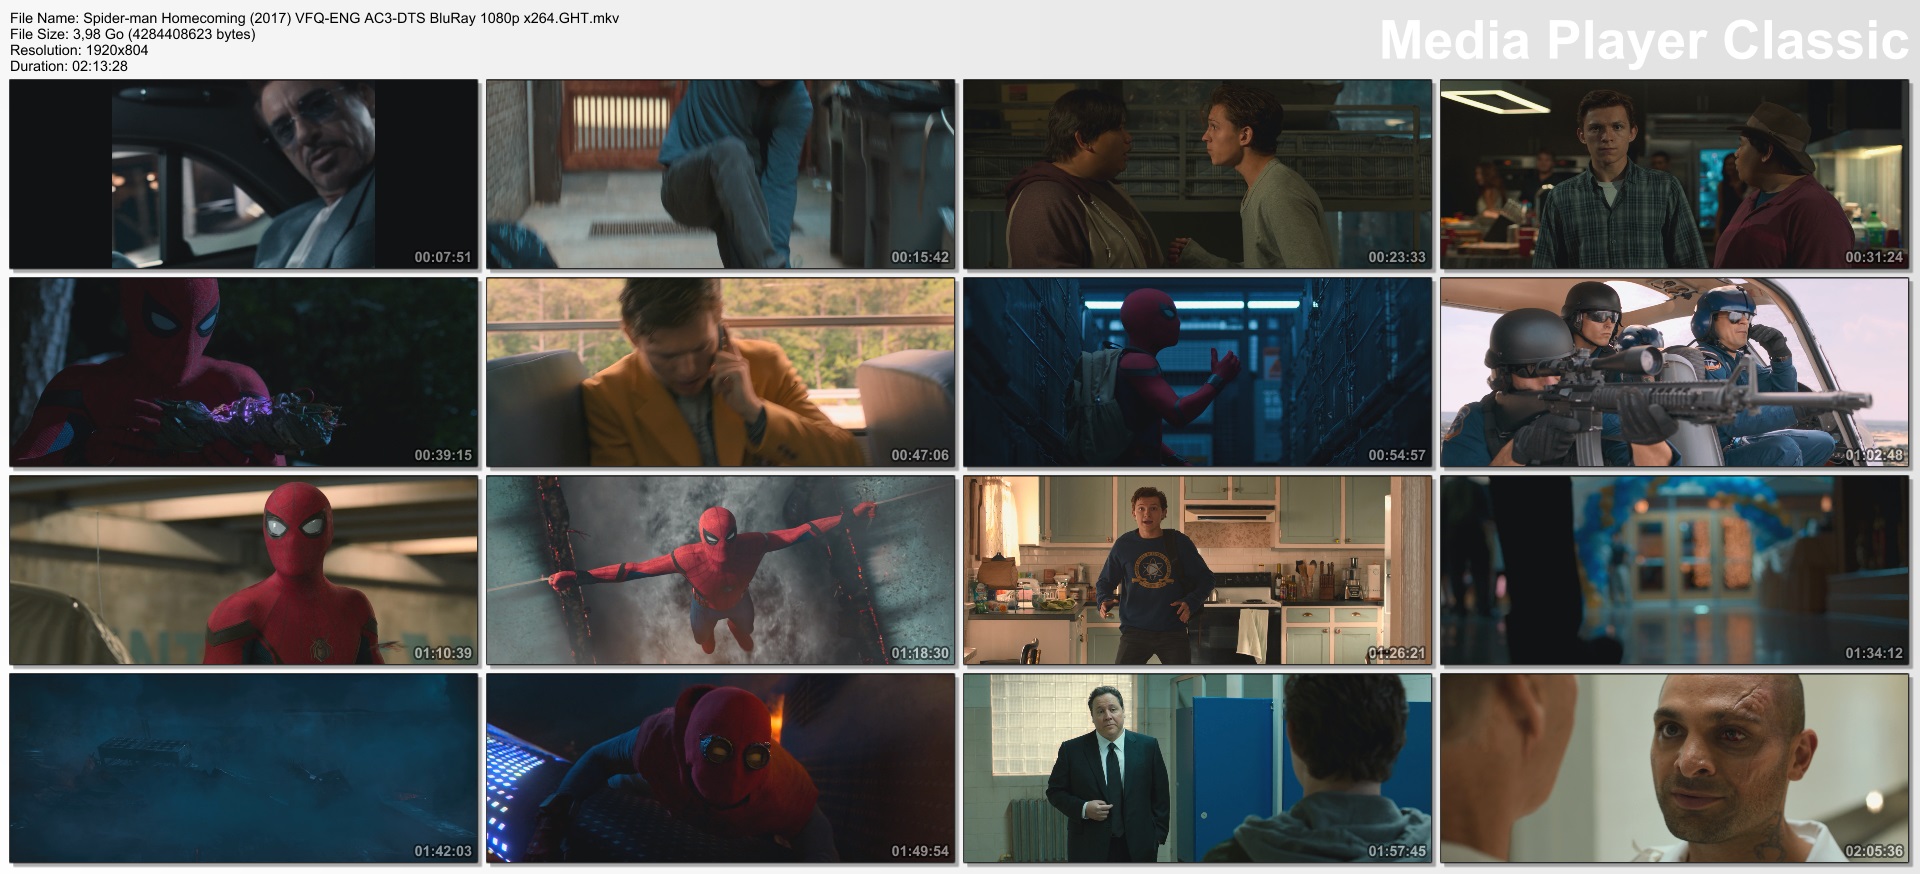 Spider-man Homecoming (2017) VFQ-ENG AC3-DTS BluRay 1080p x264.GHT